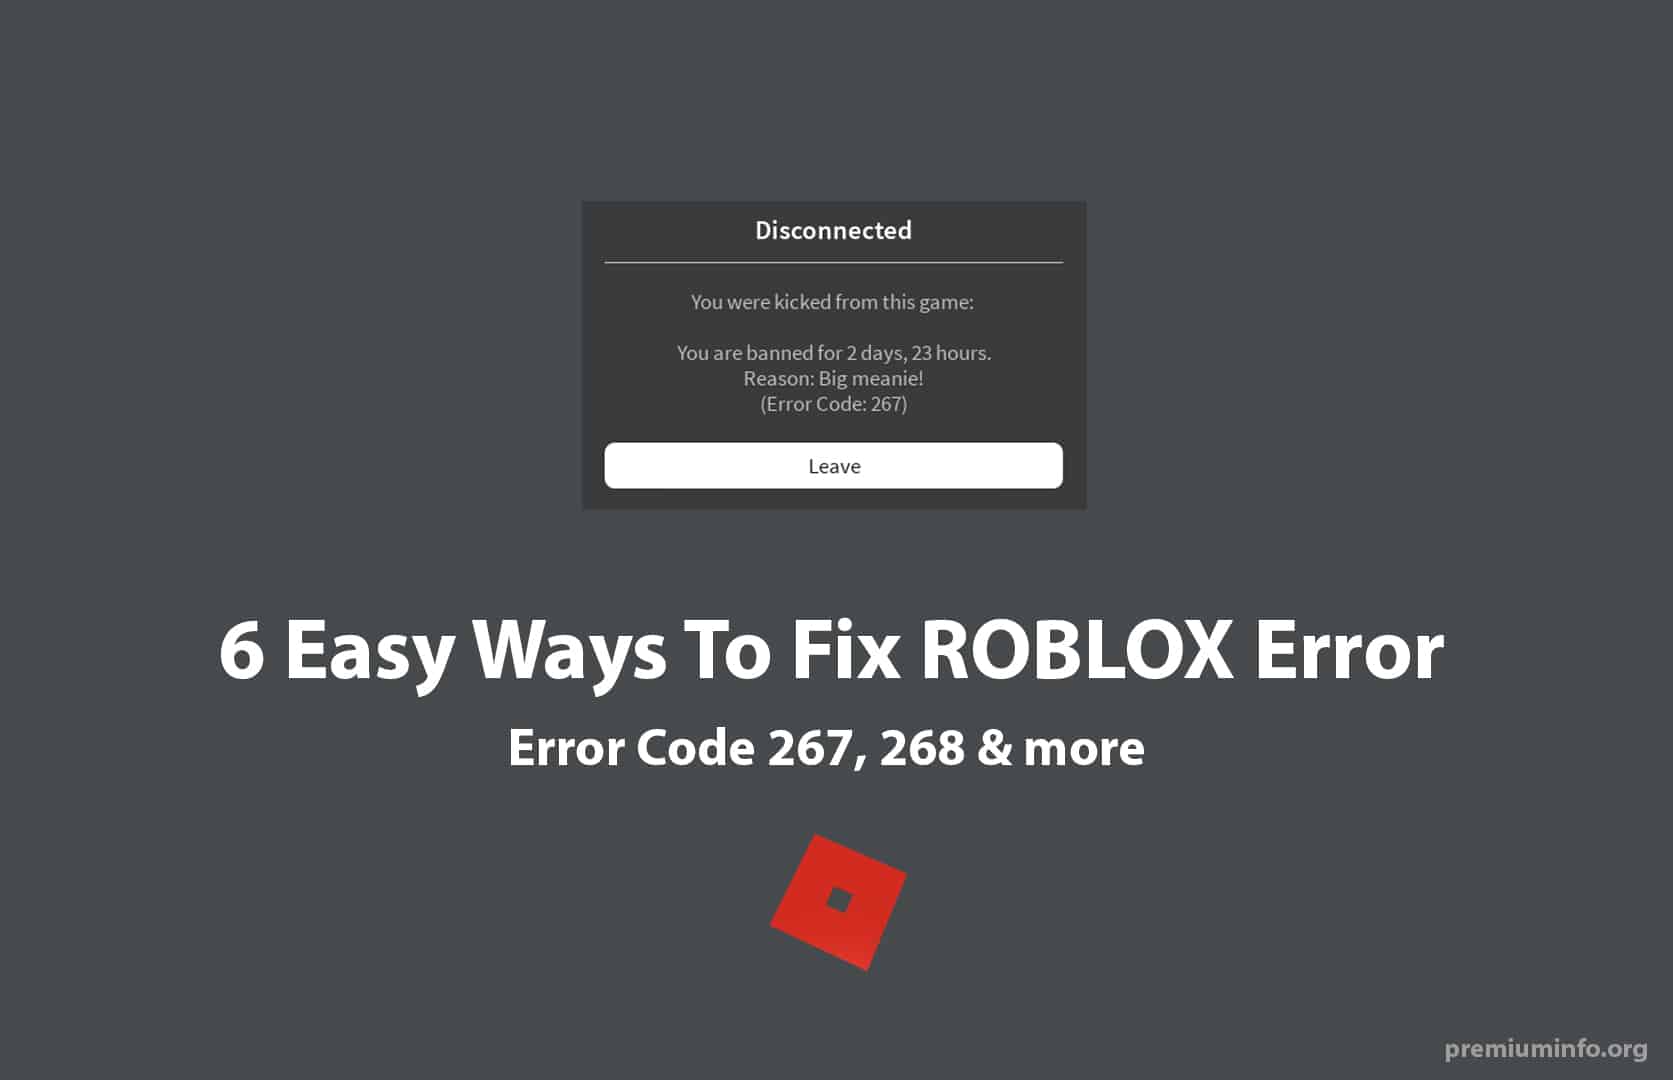 Fixed 6 Ways To Fix Roblox Error Code 267 Premiuminfo - roblox error code